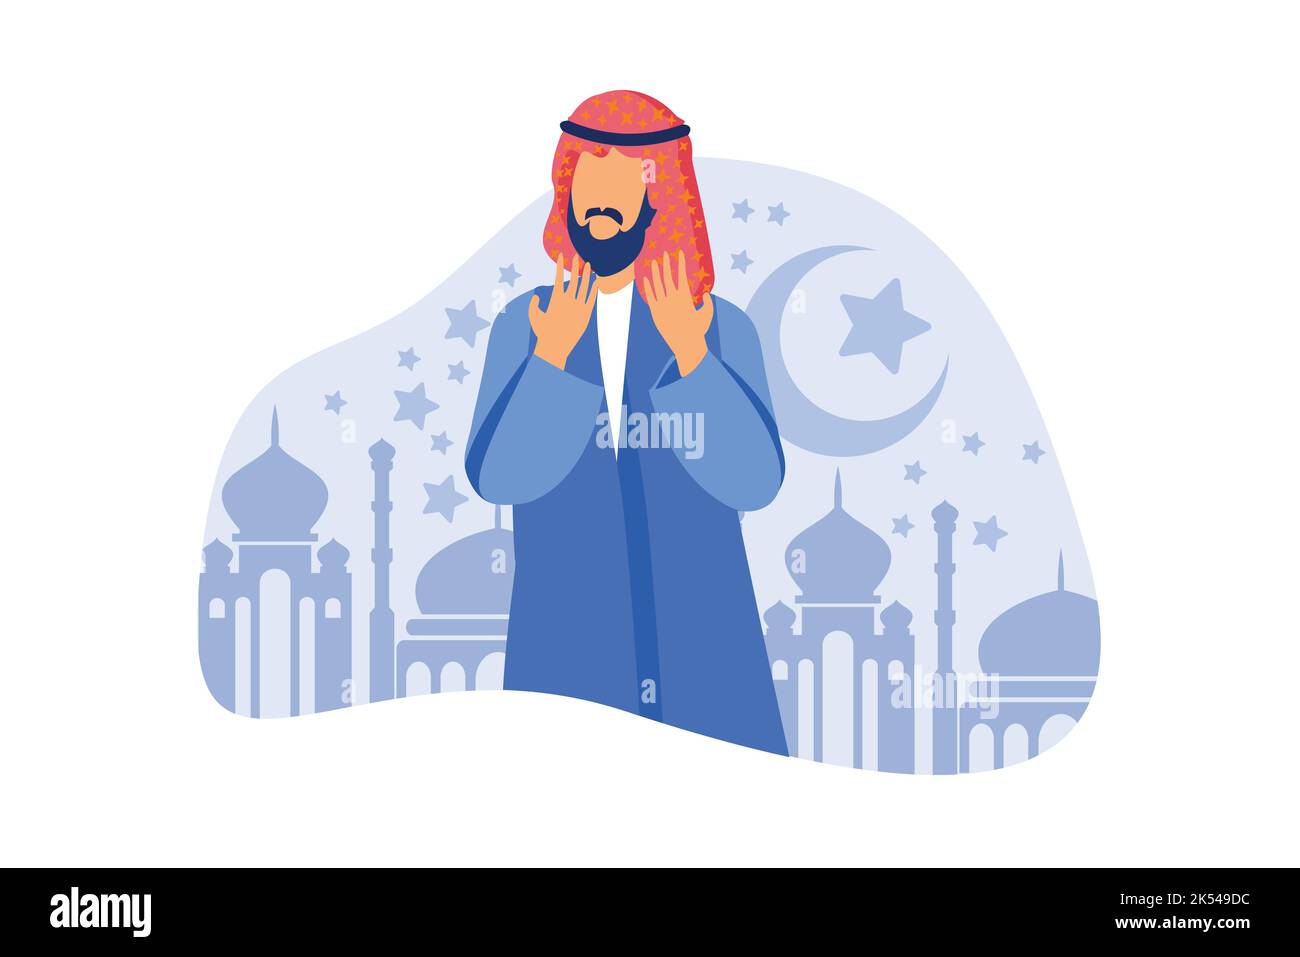 Muslim man praying illustration. ramadan mubarak 1441 H. Holy month template arabian character wearing culture outfit. flat design style for ui, greet Stock Vector